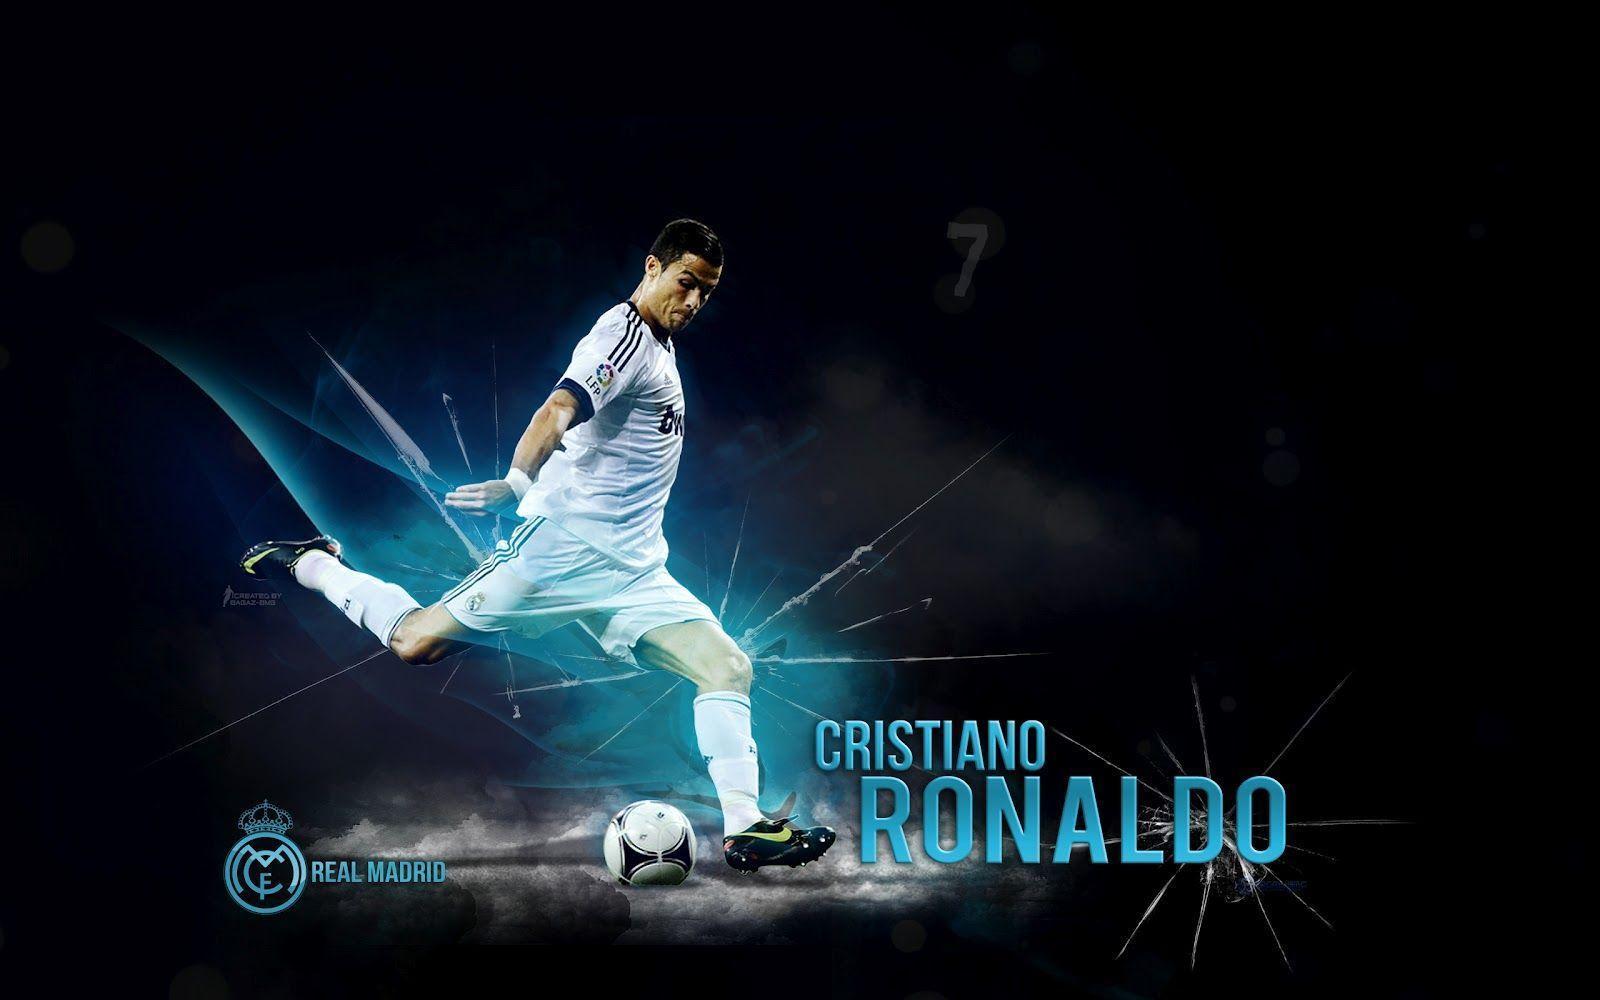 Cristiano Ronaldo Wallpaper Collection Pack 1